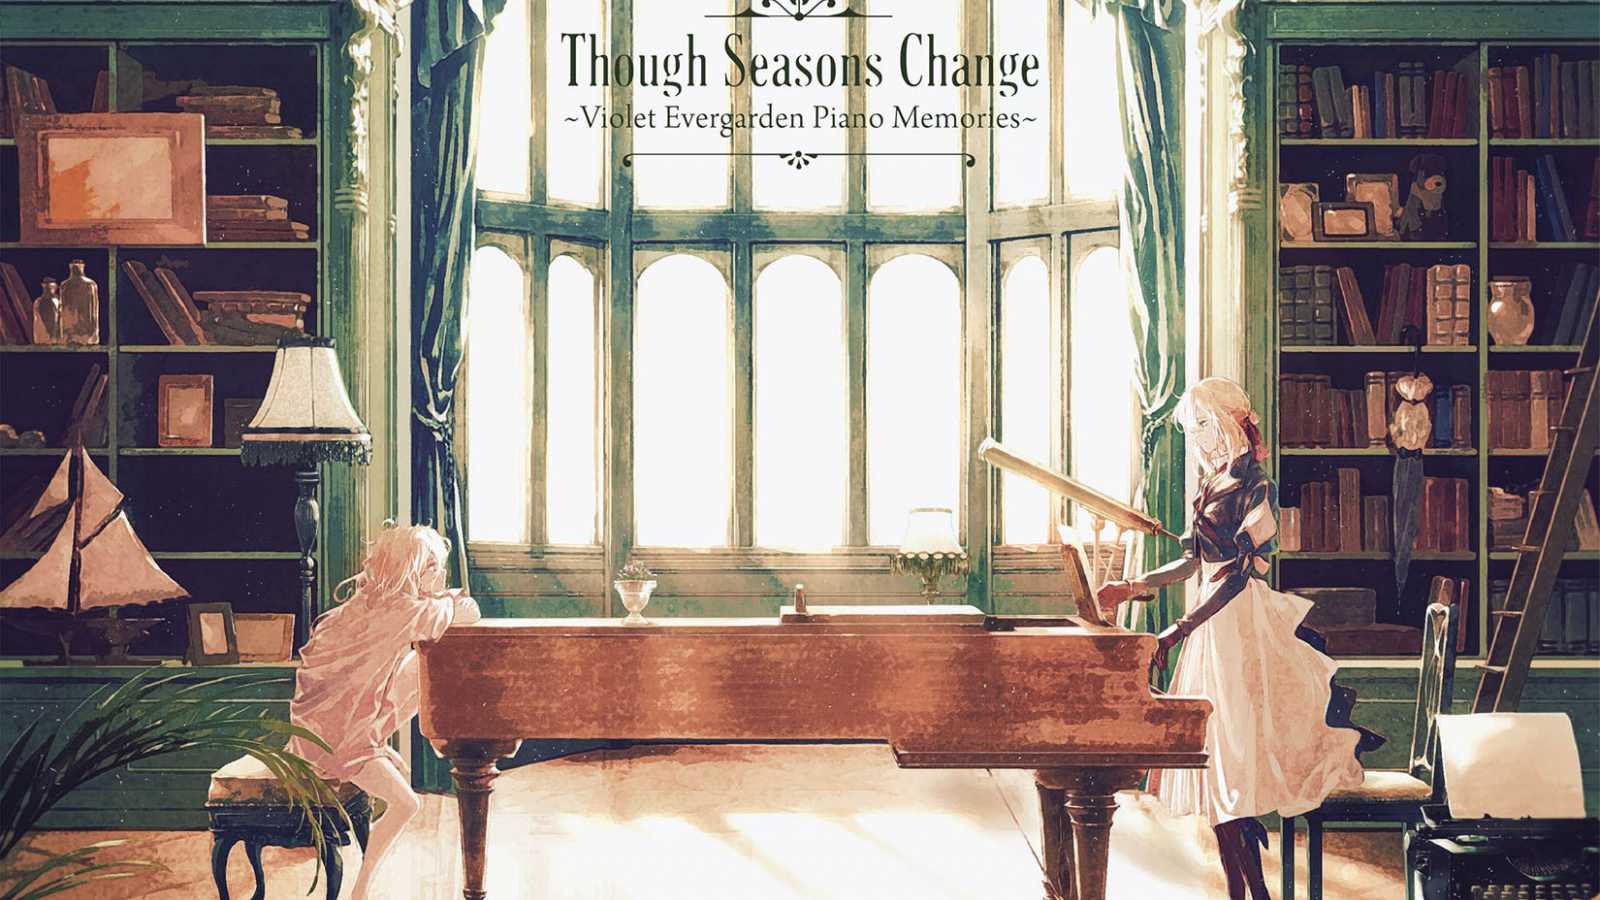 Violet Evergarden Piano Arrangement Album Released © BANDAI NAMCO Arts Inc. / Lantis all rights reserved